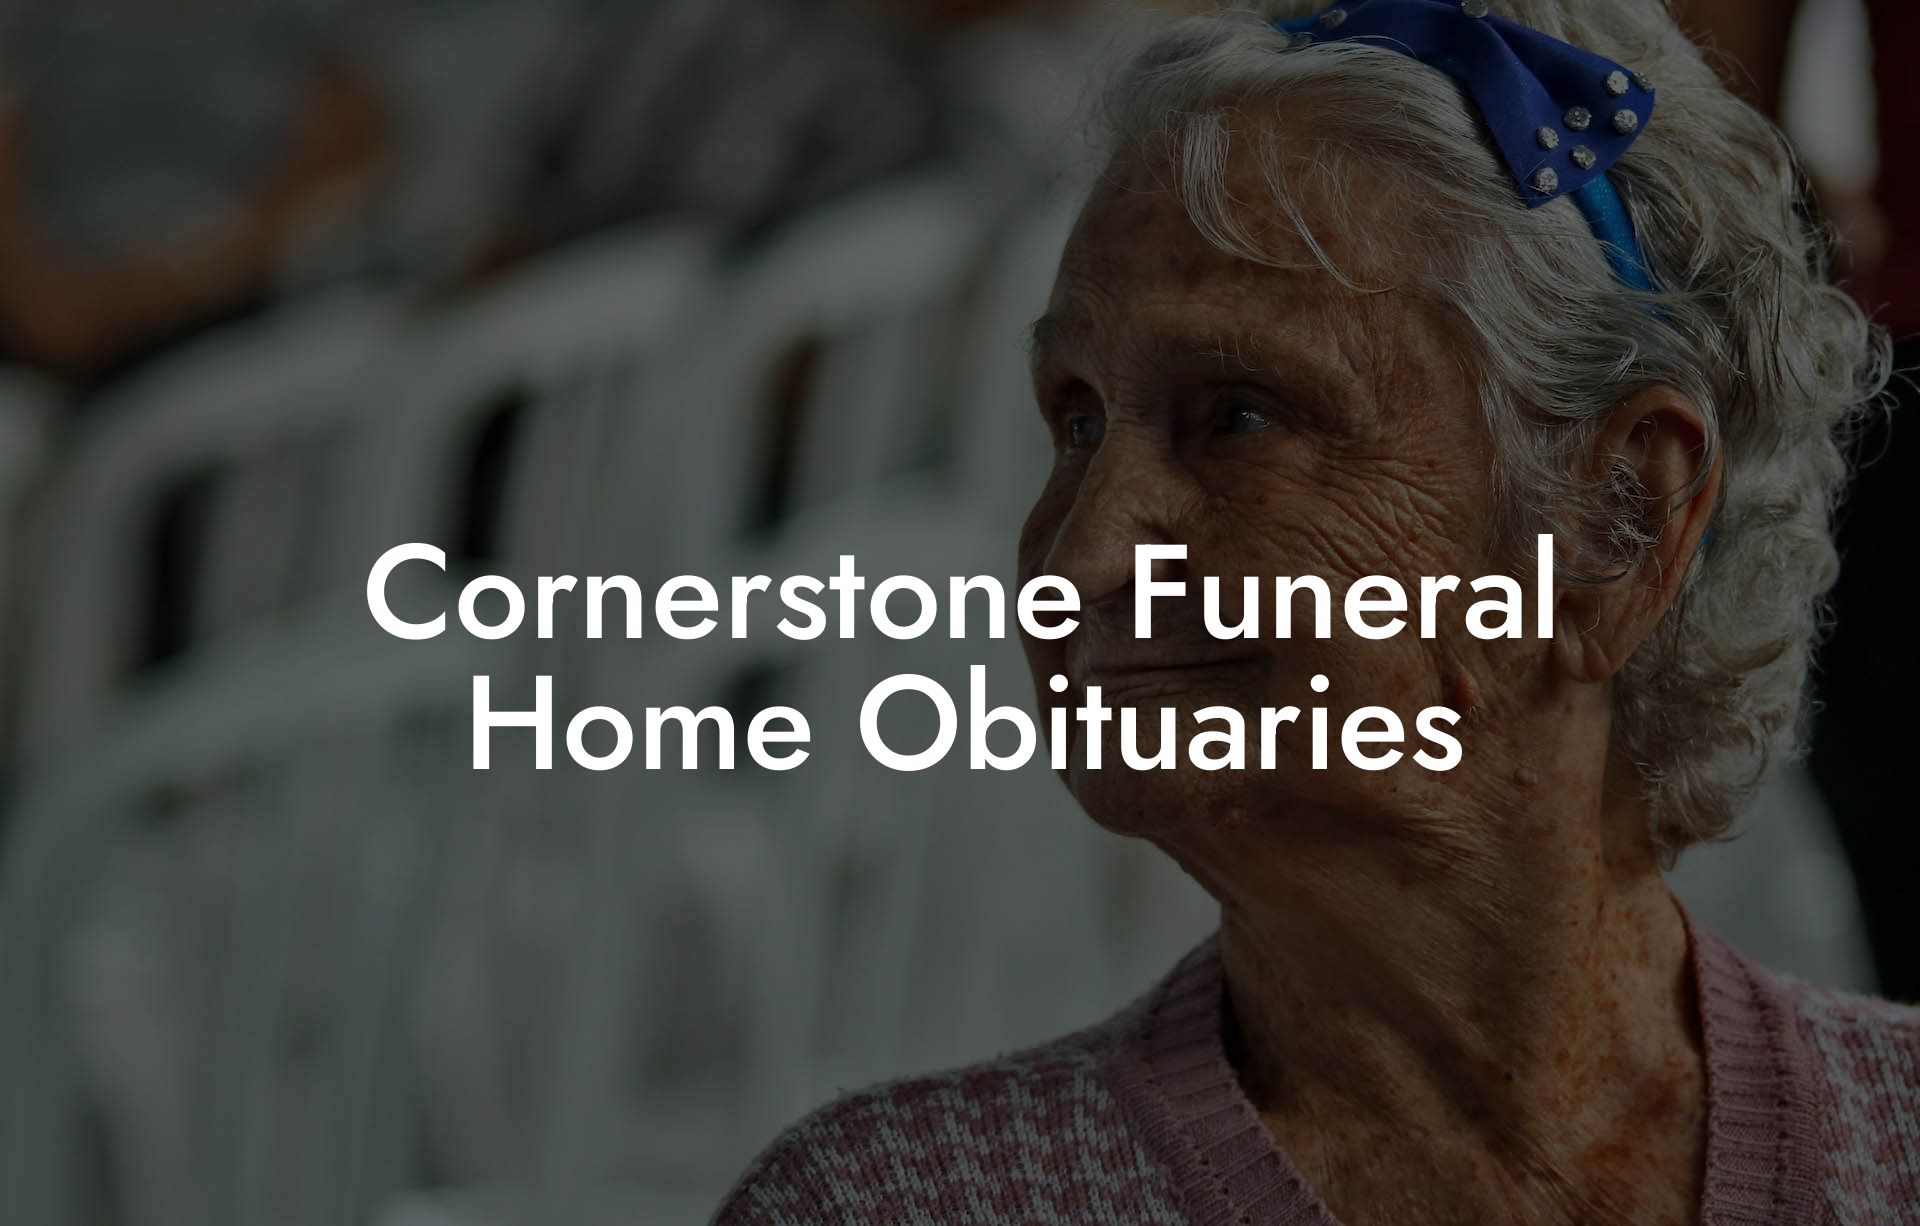 Cornerstone Funeral Home Obituaries